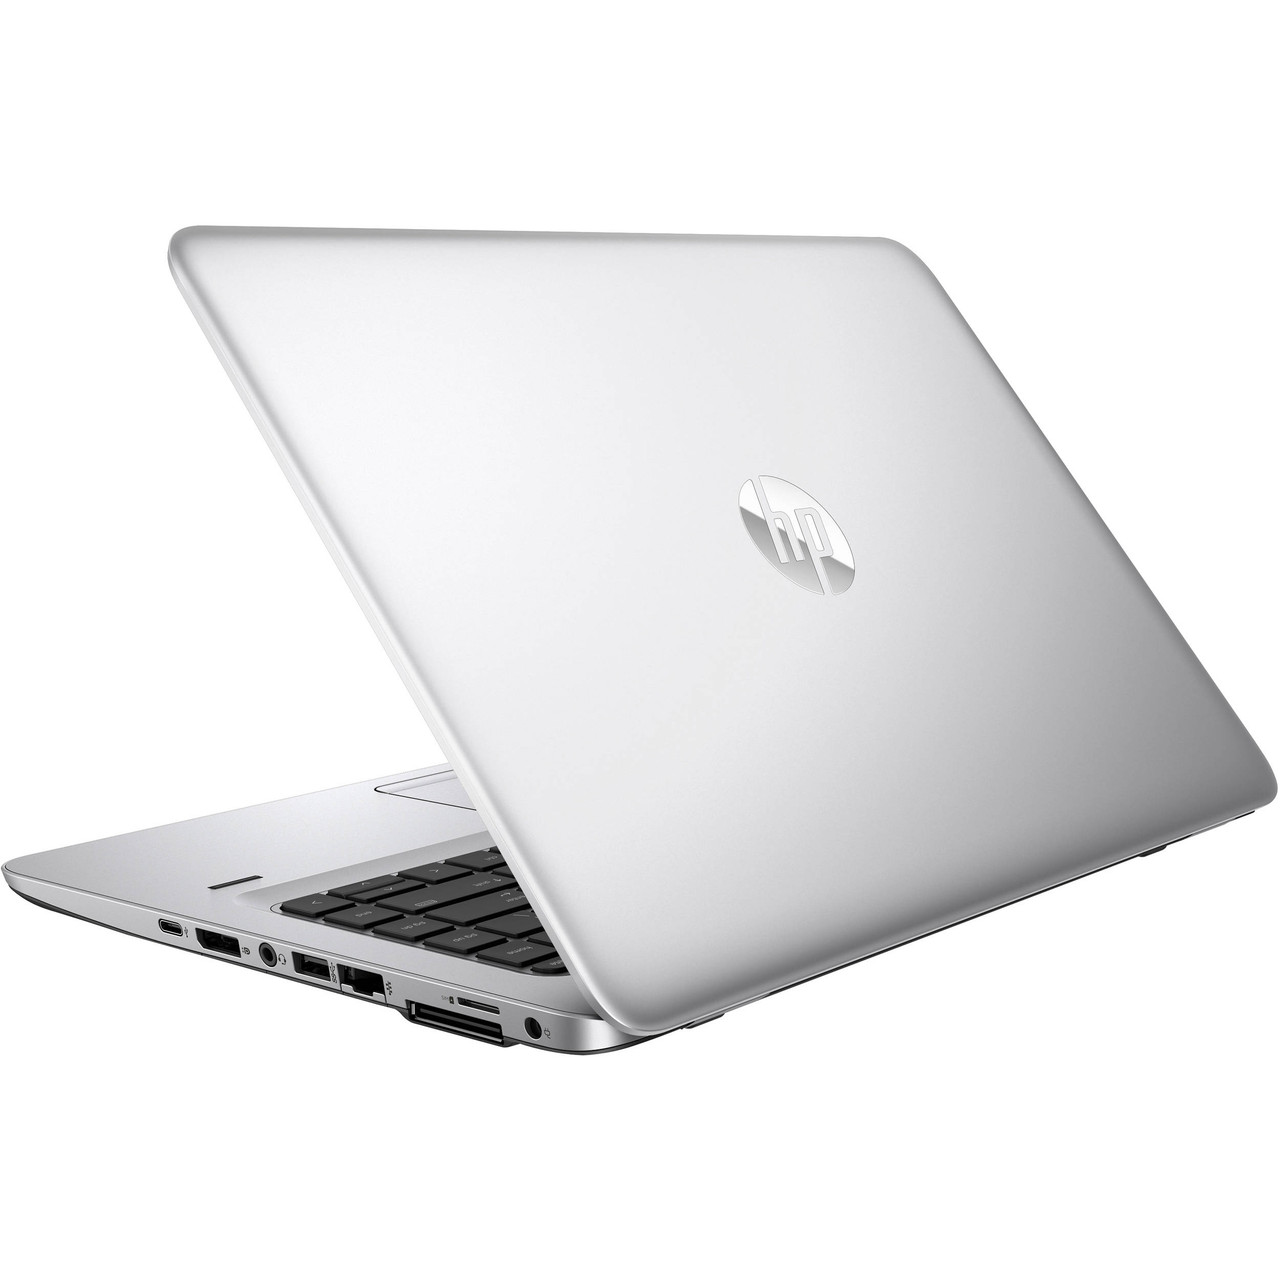 Hp Elitebook 840 G3 Laptop Intel Core i5 2.40 GHz 16GB Ram 256GB SSD W10P | Refurbished